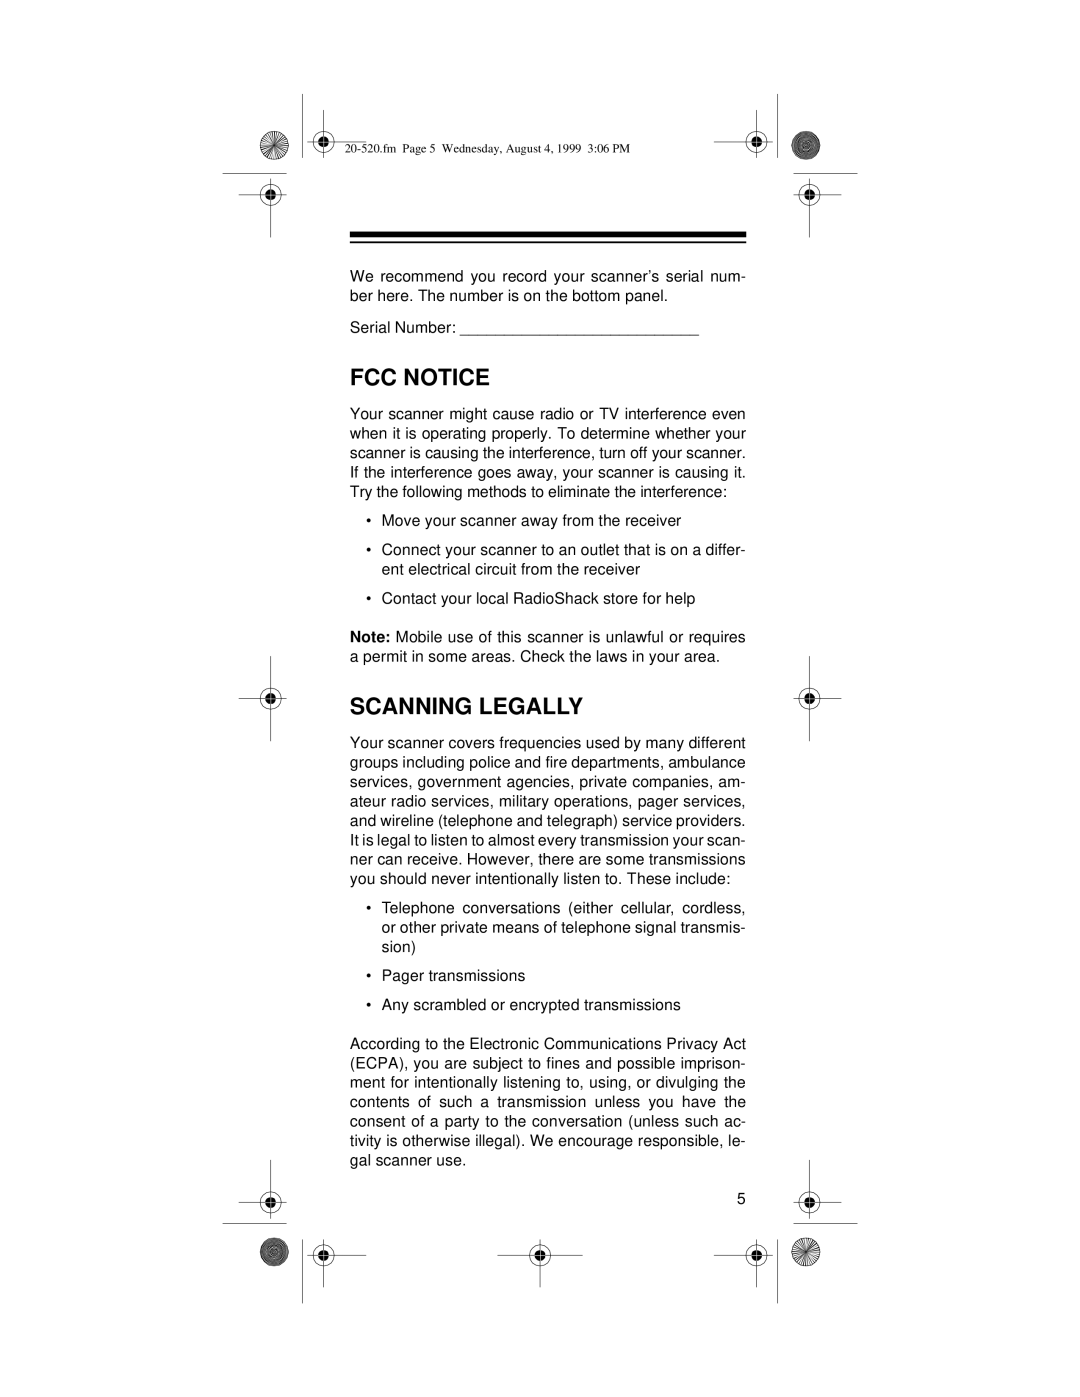 Radio Shack PRO-90 owner manual Fcc Notice, Scanning Legally 